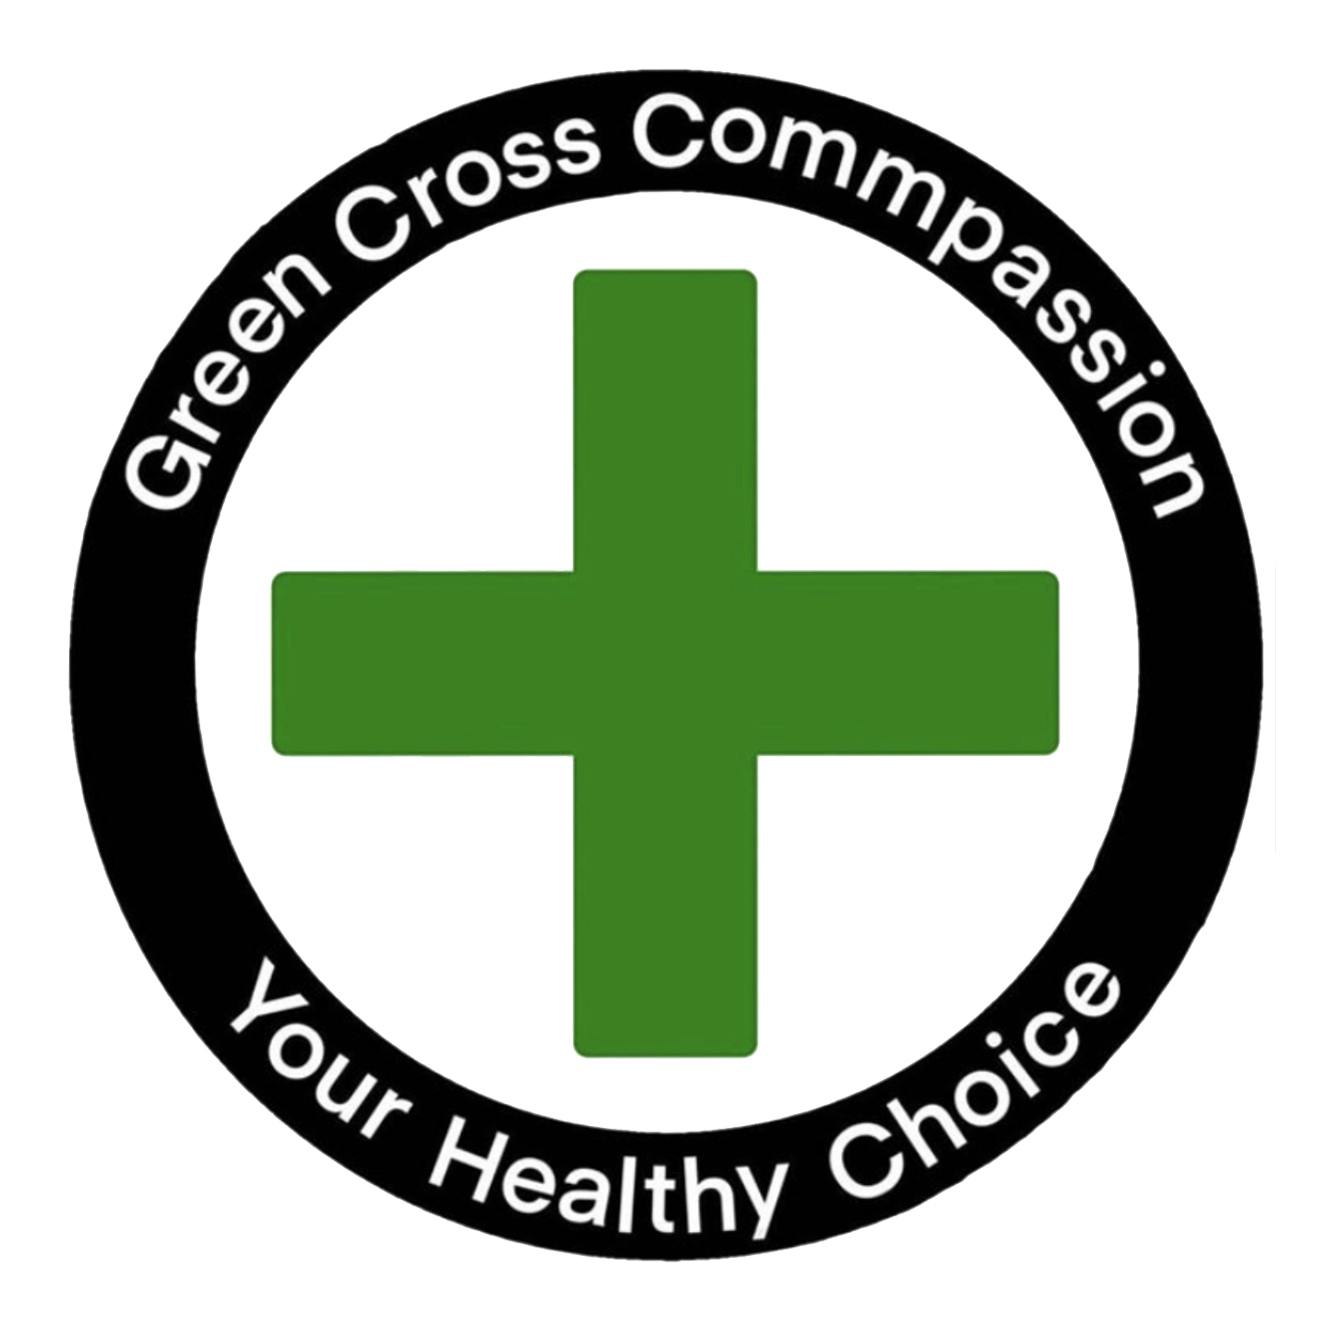 GreenCrossCommpassion